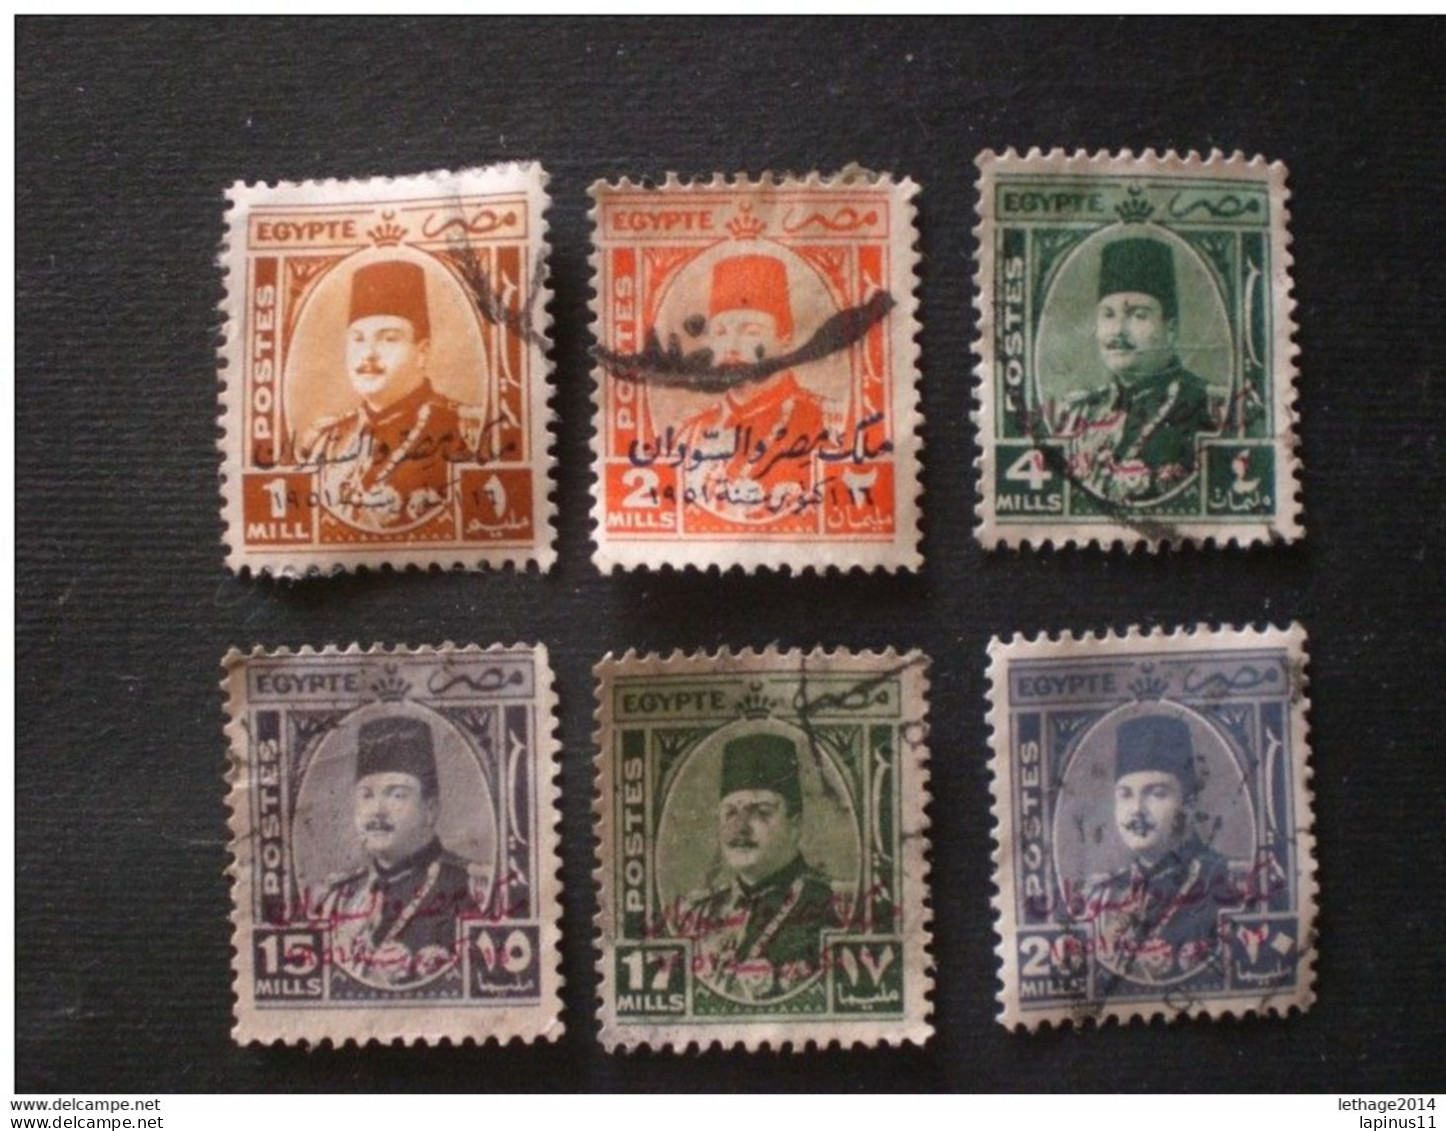 EGYPT 1948 King Farouk - Egypt Postage Stamps Of 1951 Overprinted "SUDAN" In Arabic RARE - Gebraucht